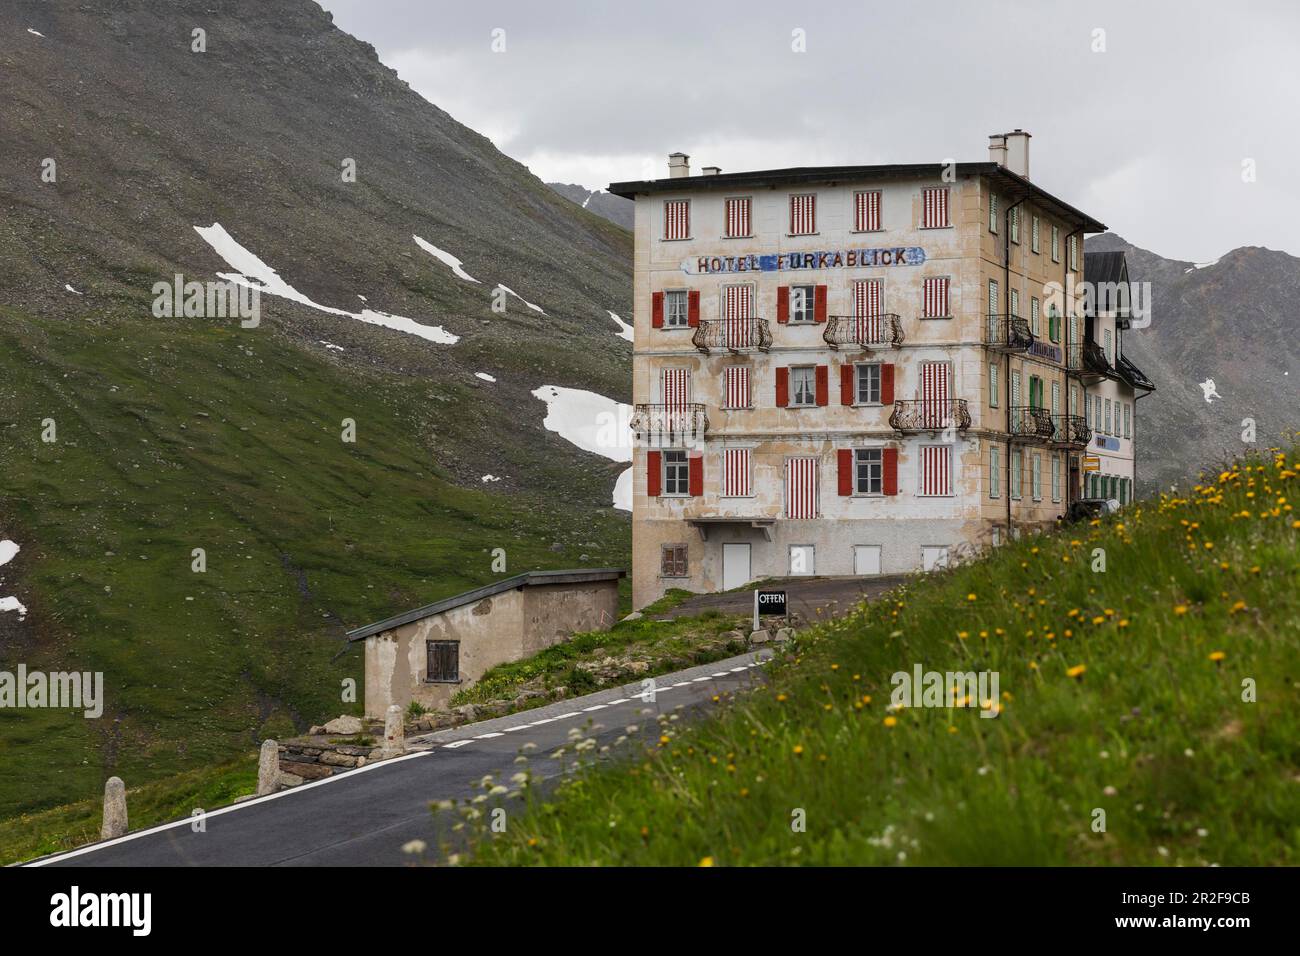 Hotel Furkablick, Historic Building on the Furka Pass, Alpine Road, Oberwald, Canton Valais, Switzerland Stock Photo